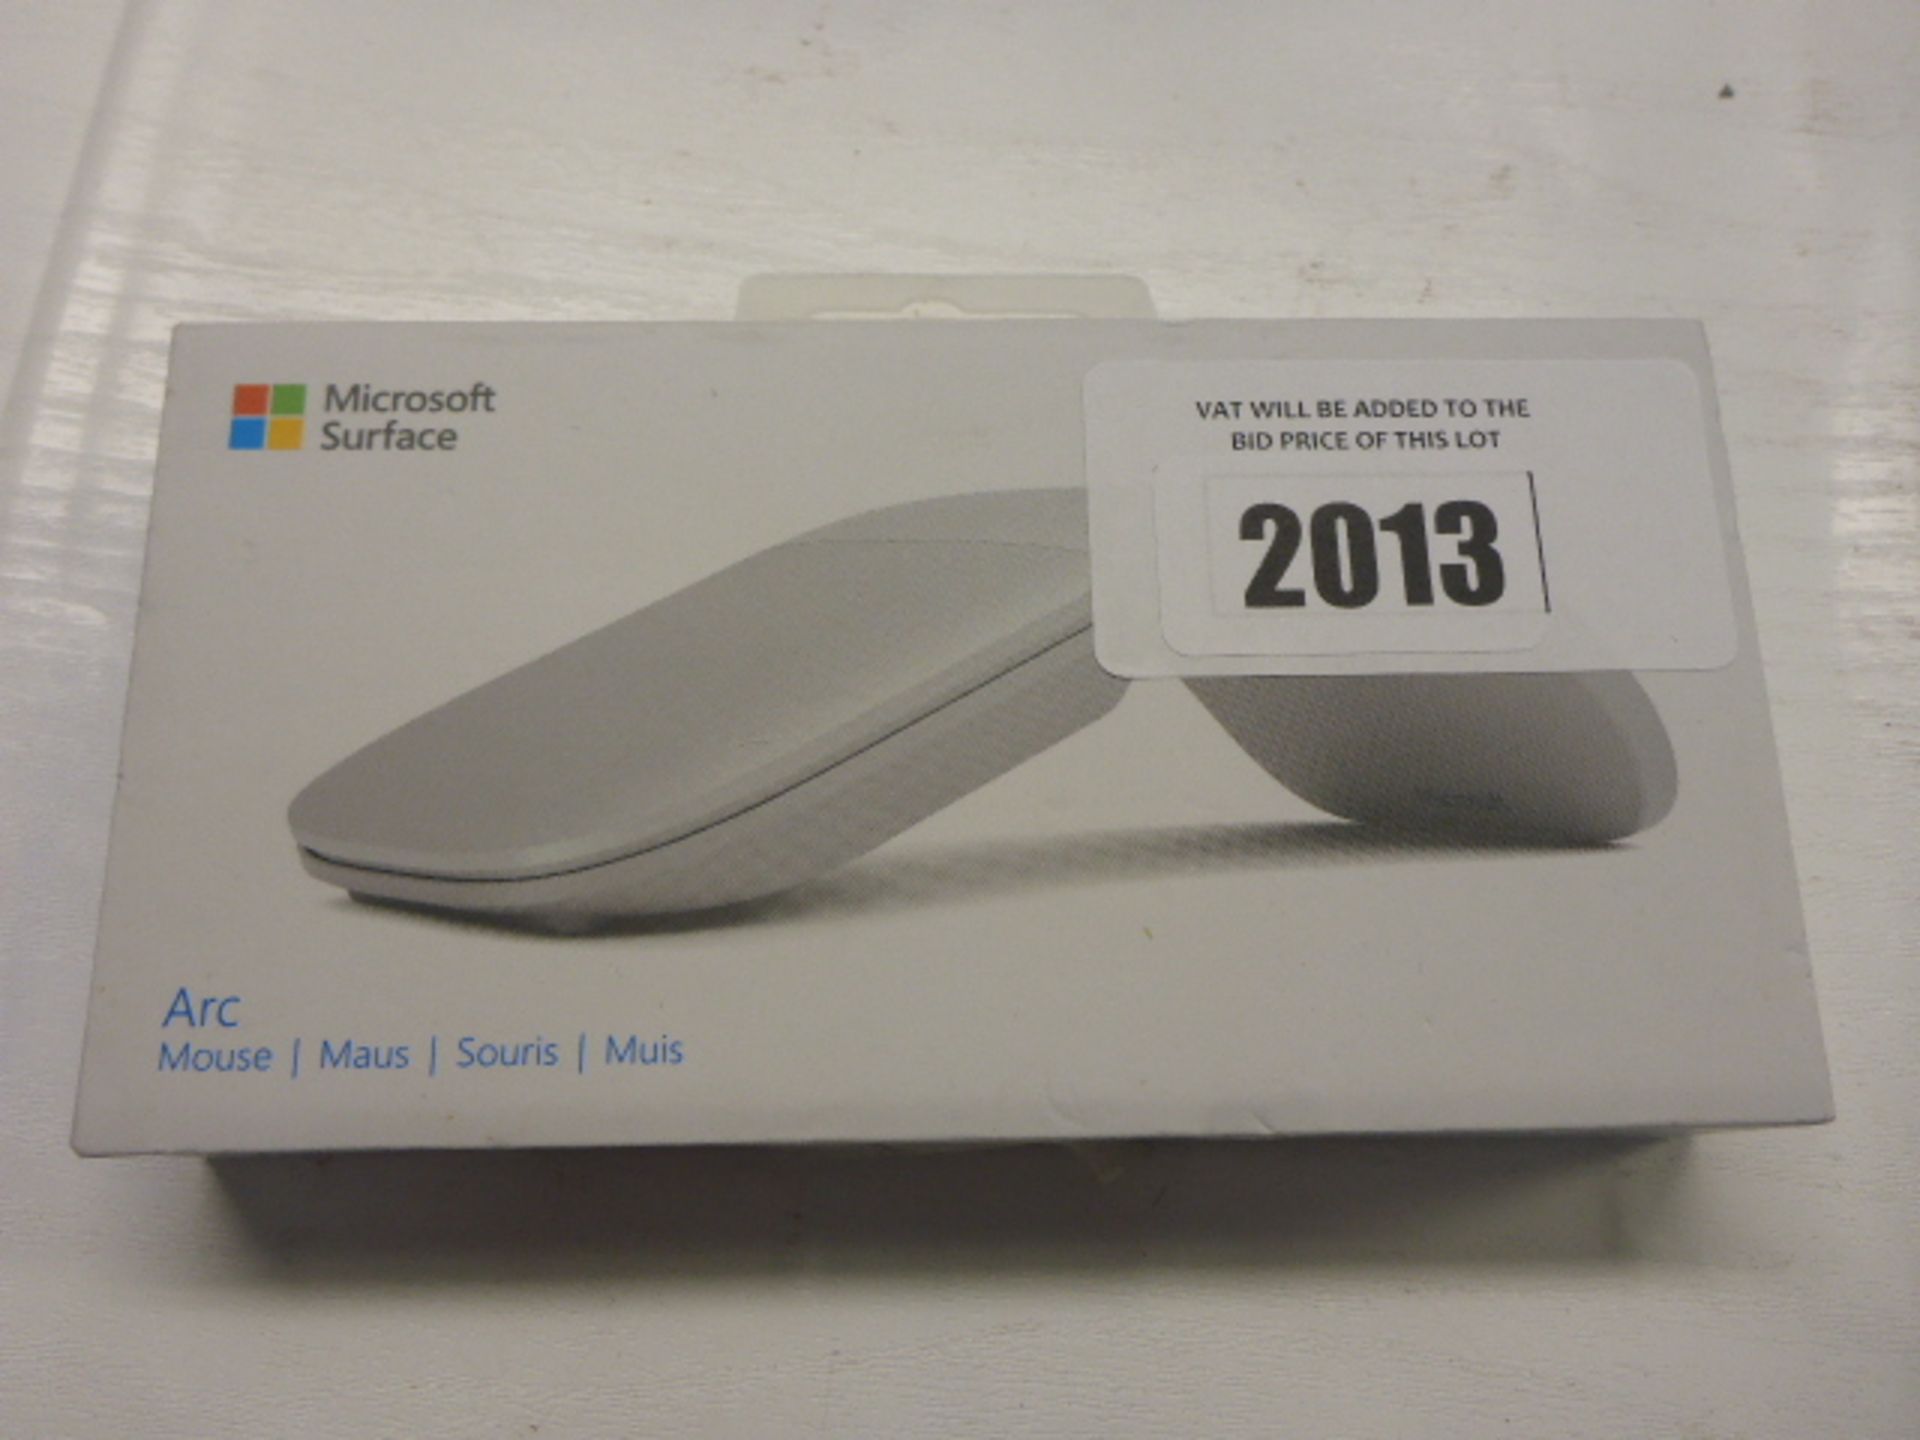 Microsoft Surface Arc mouse